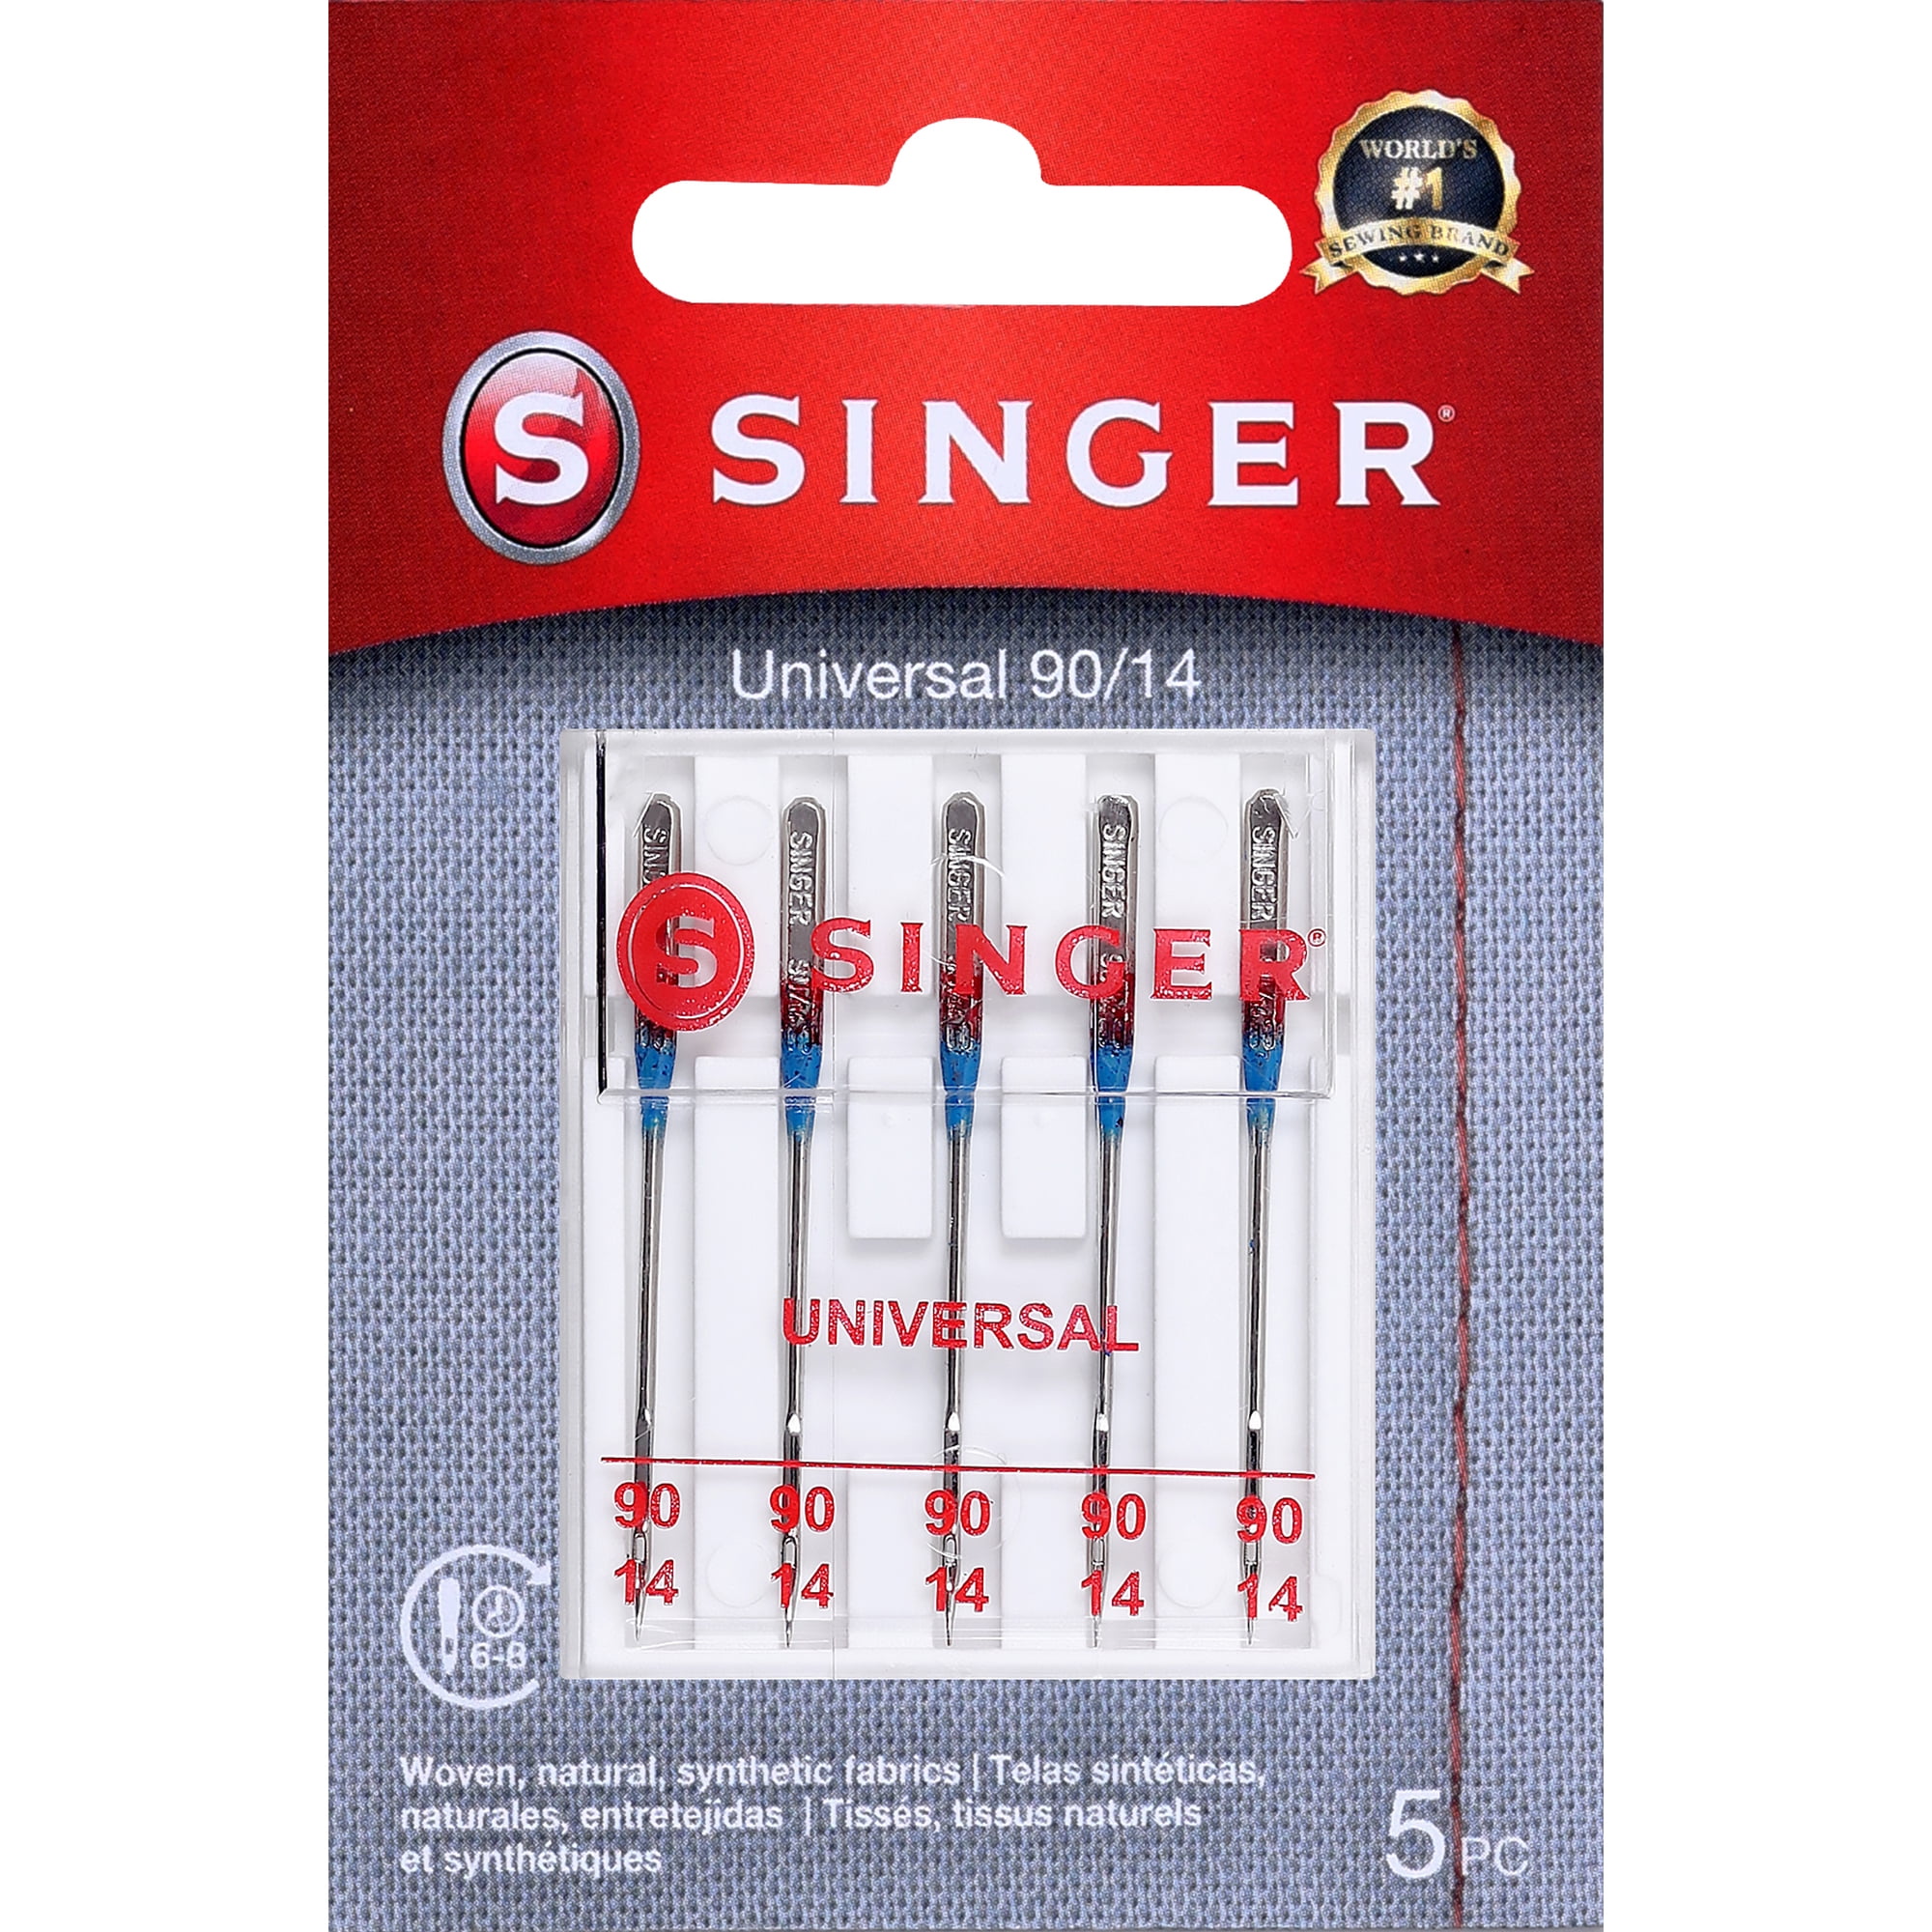 Universal Needles - Size 90/14 - Pack of 5 - Schmetz